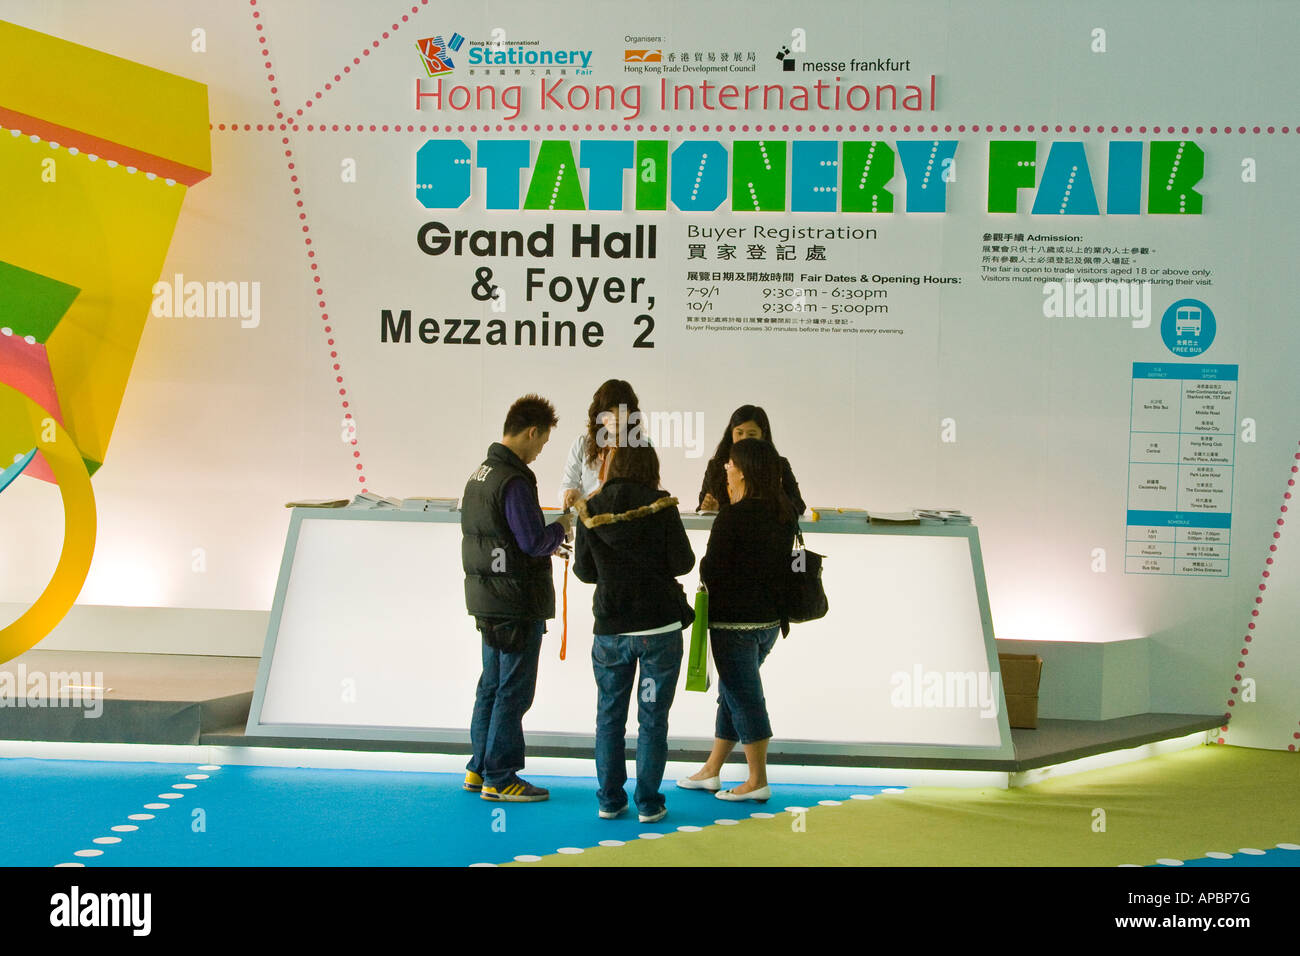 Hong Kong International Stationery Fair Convention and Exhibiton Centre Stock Photo